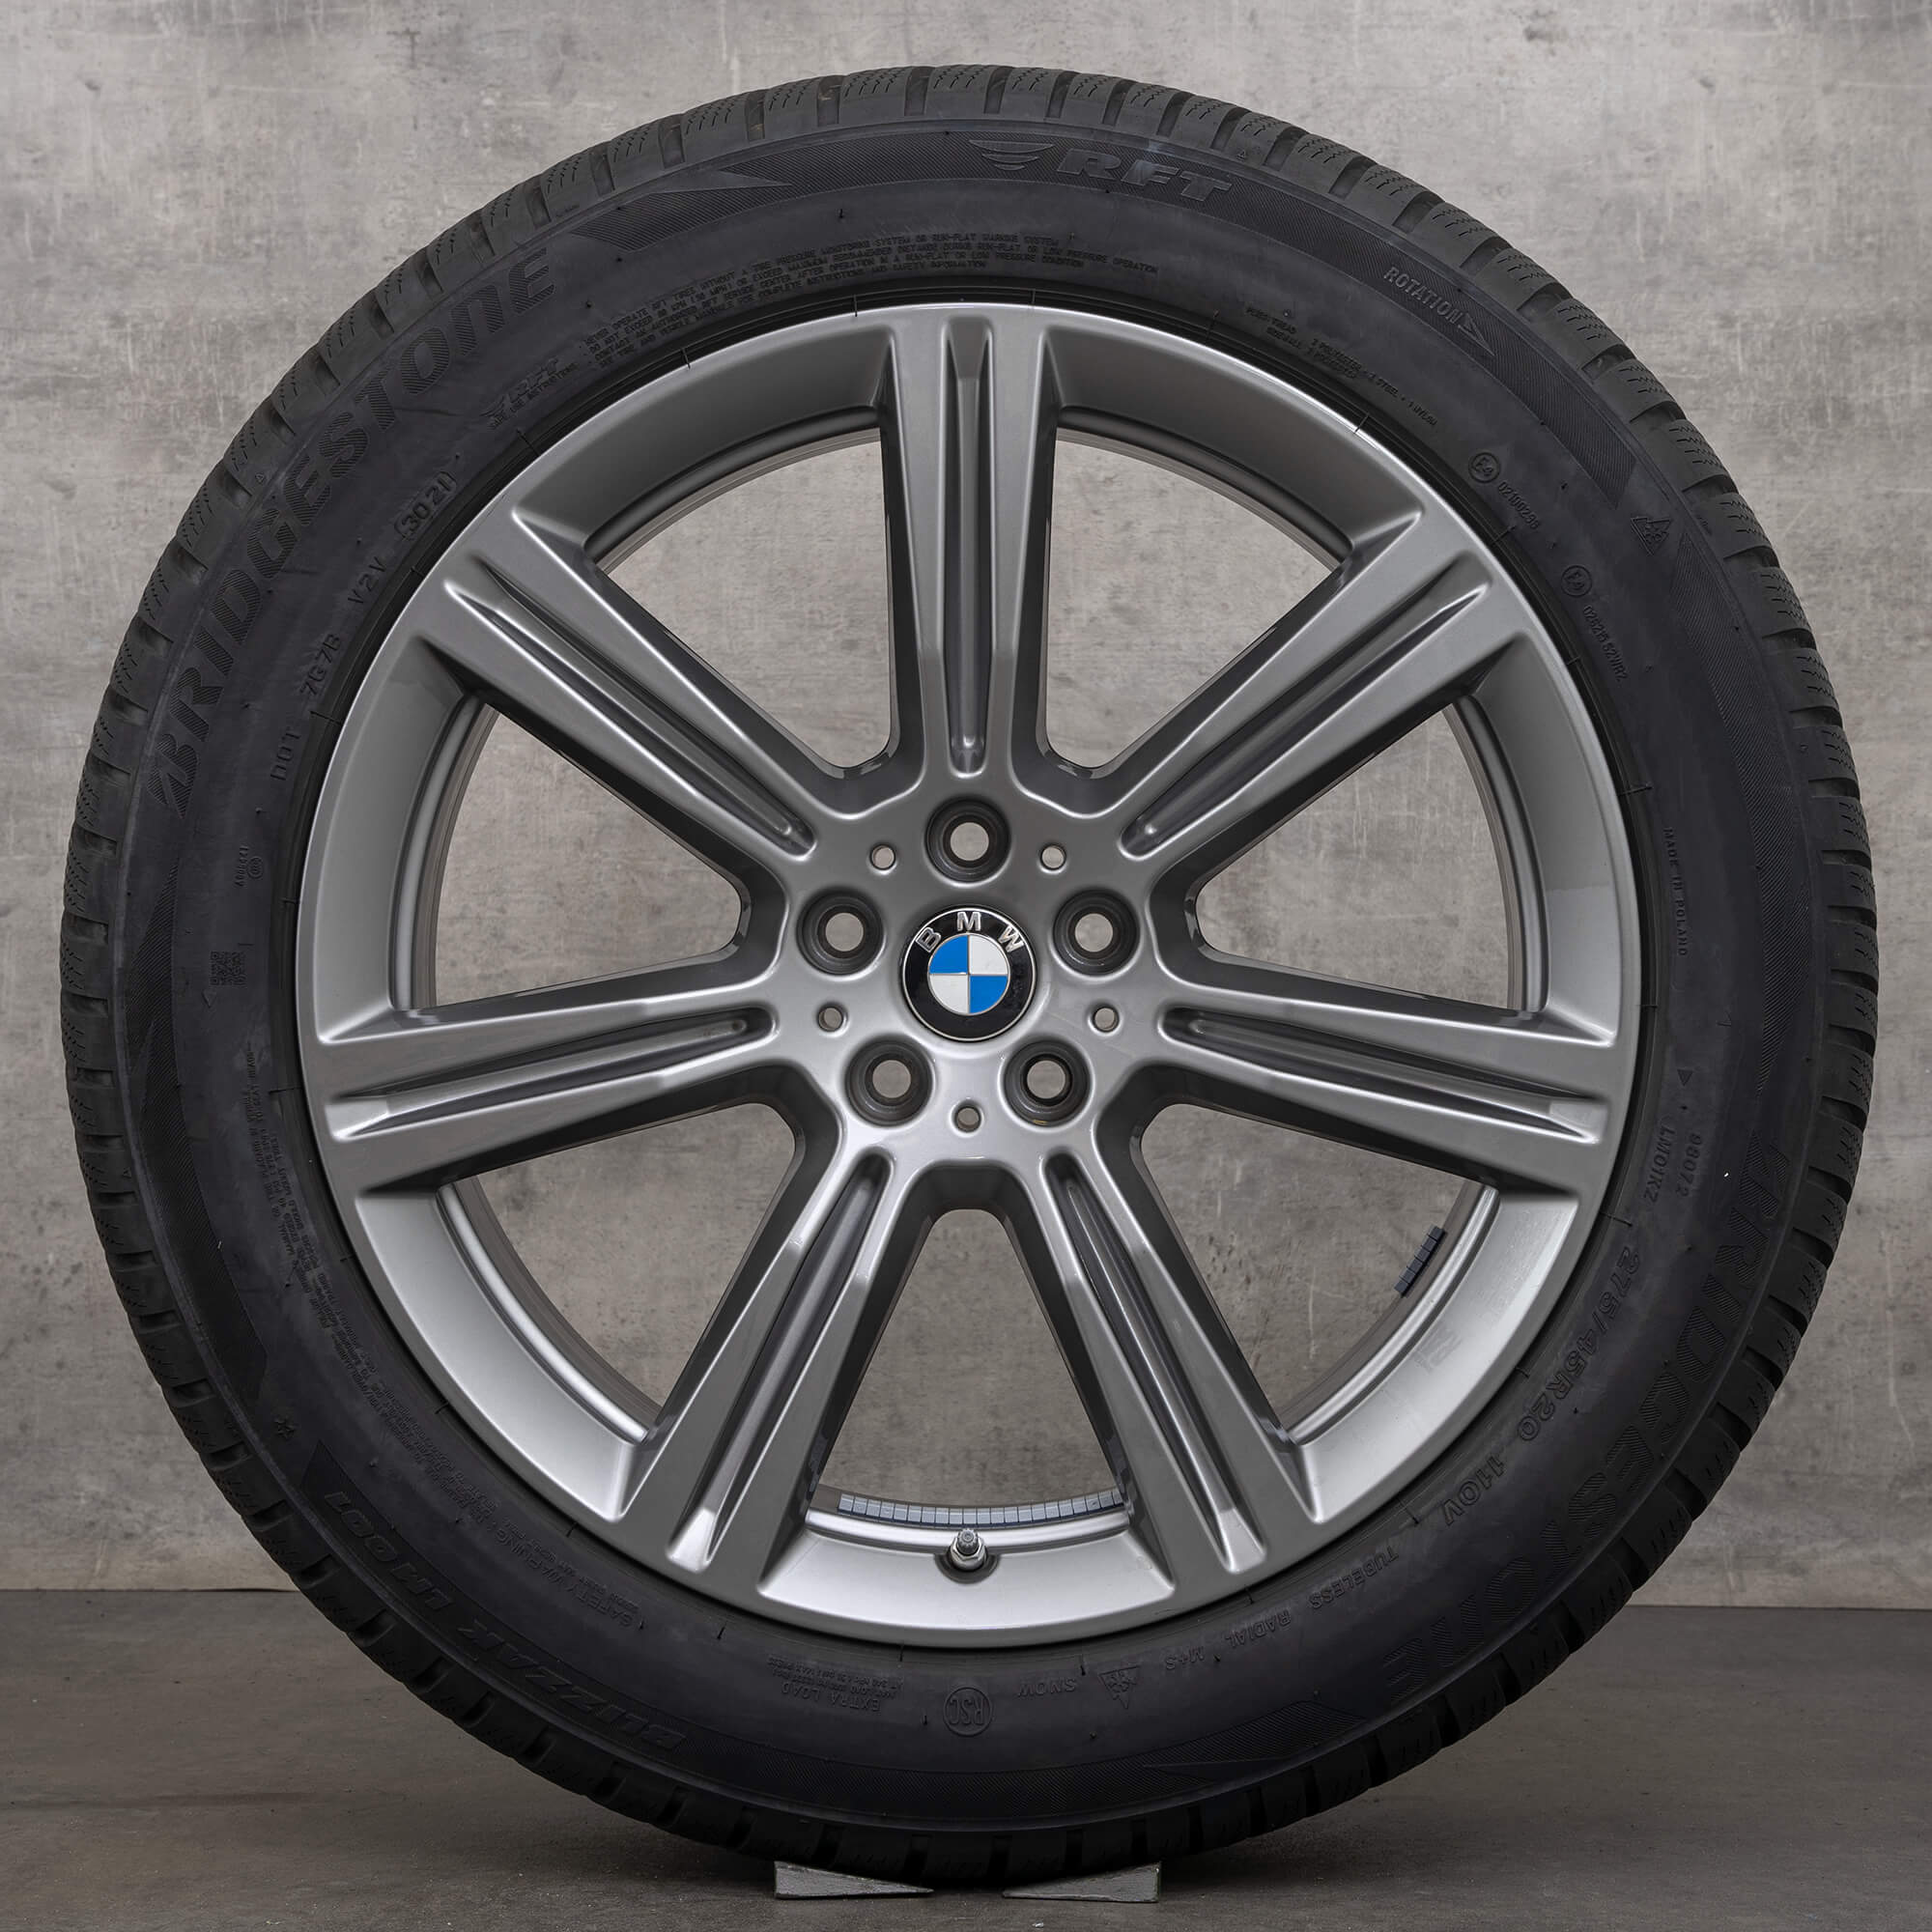 BMW X6 G06 X5 G05 winter wheels 20 inch rims tires 6883753 Styling 736